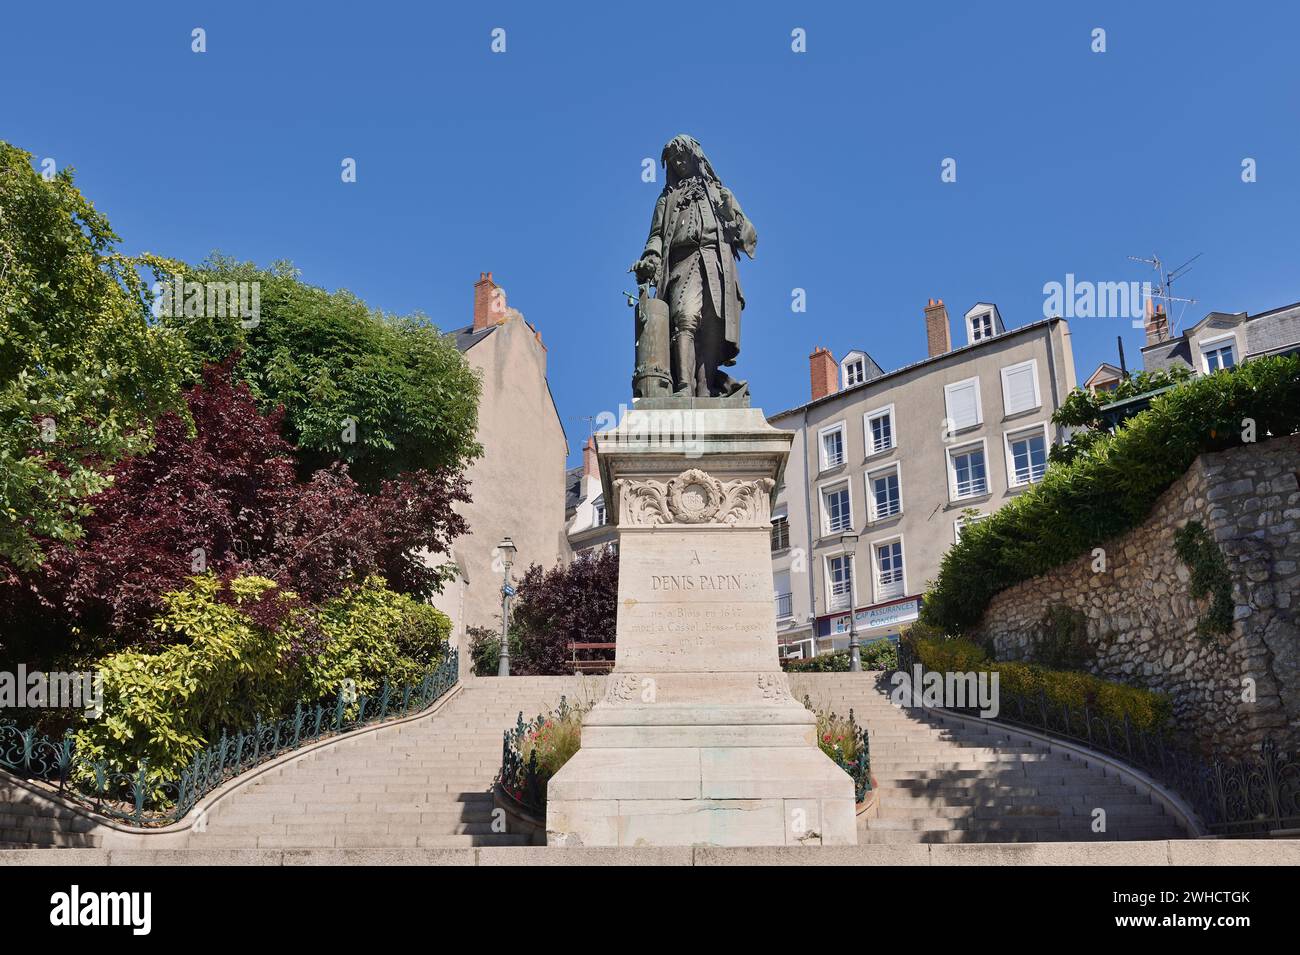 Statue of the physicist, mathematician and inventor Denis Papin, Blois, Loir-et-Cher department, Centre-Val de Loire region, France Stock Photo